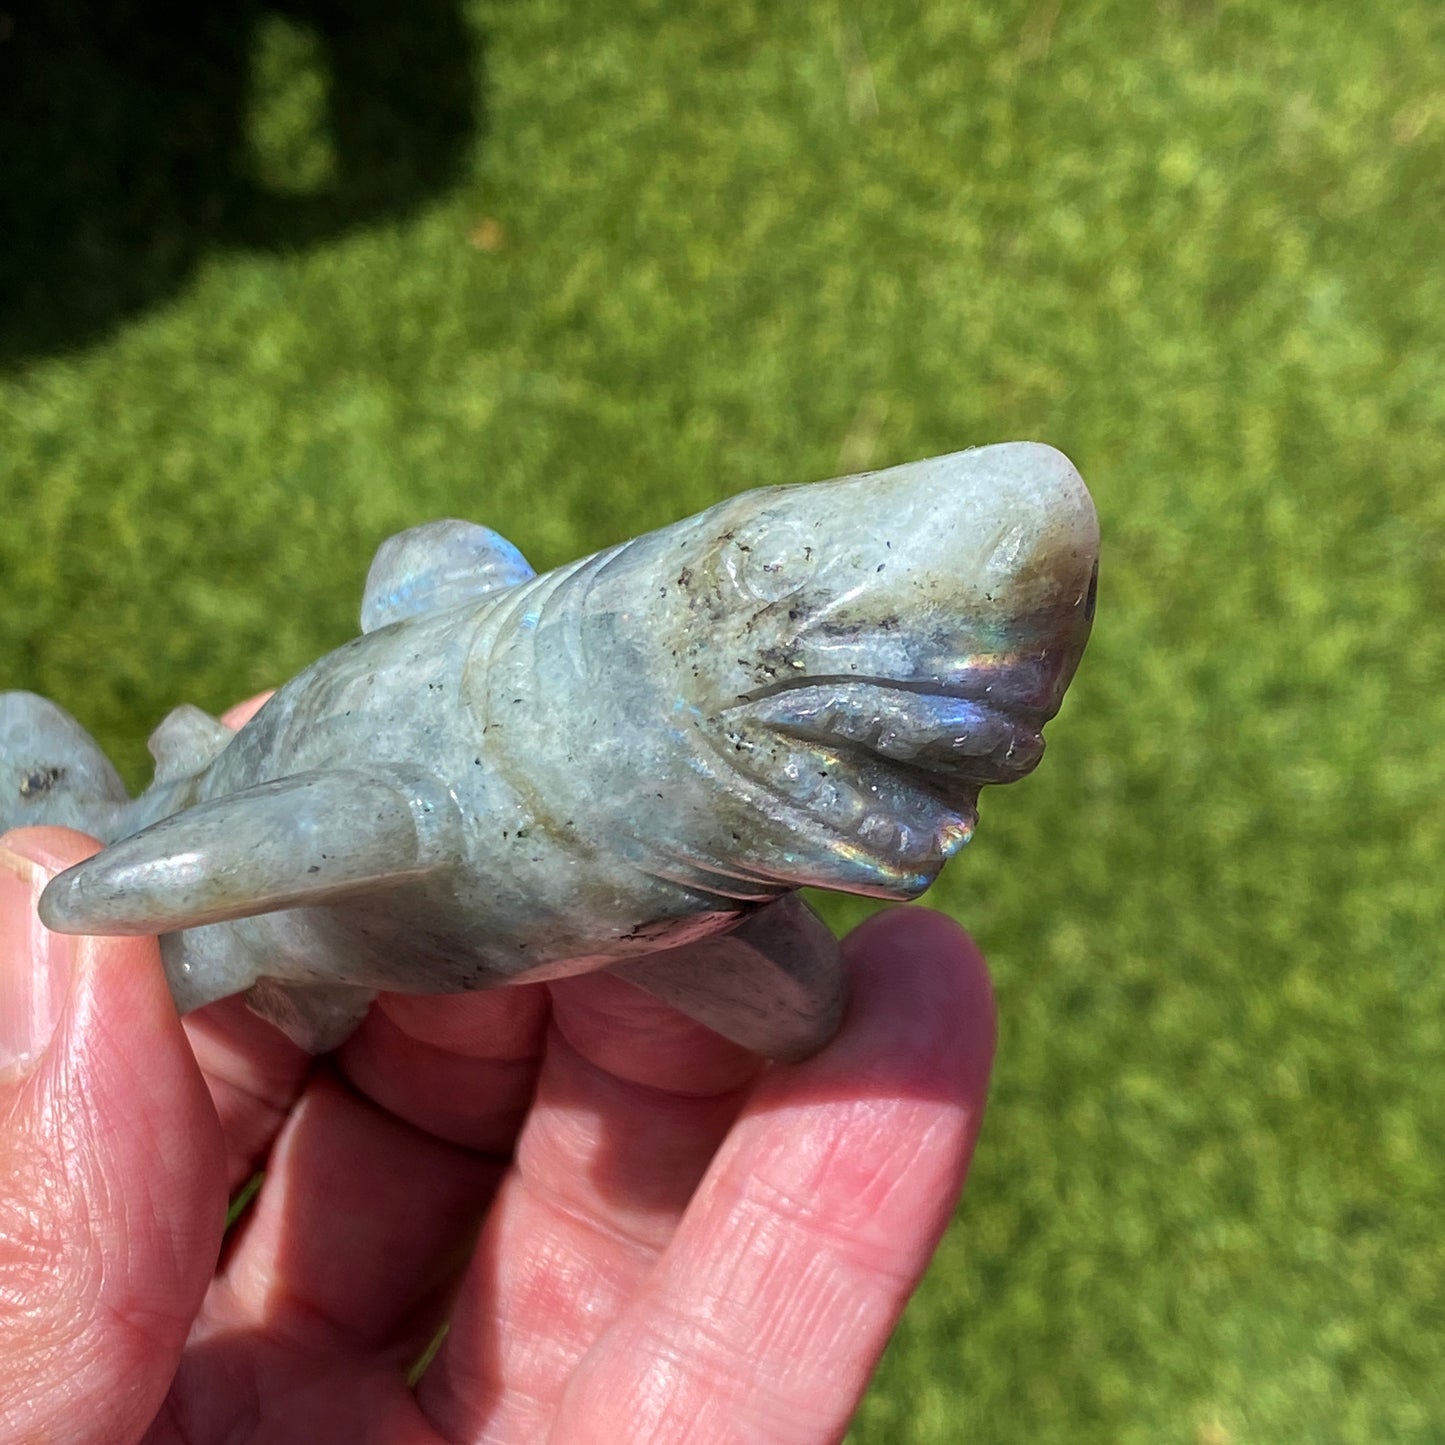 Labradorite gemstone carved Great White Shark Figurine